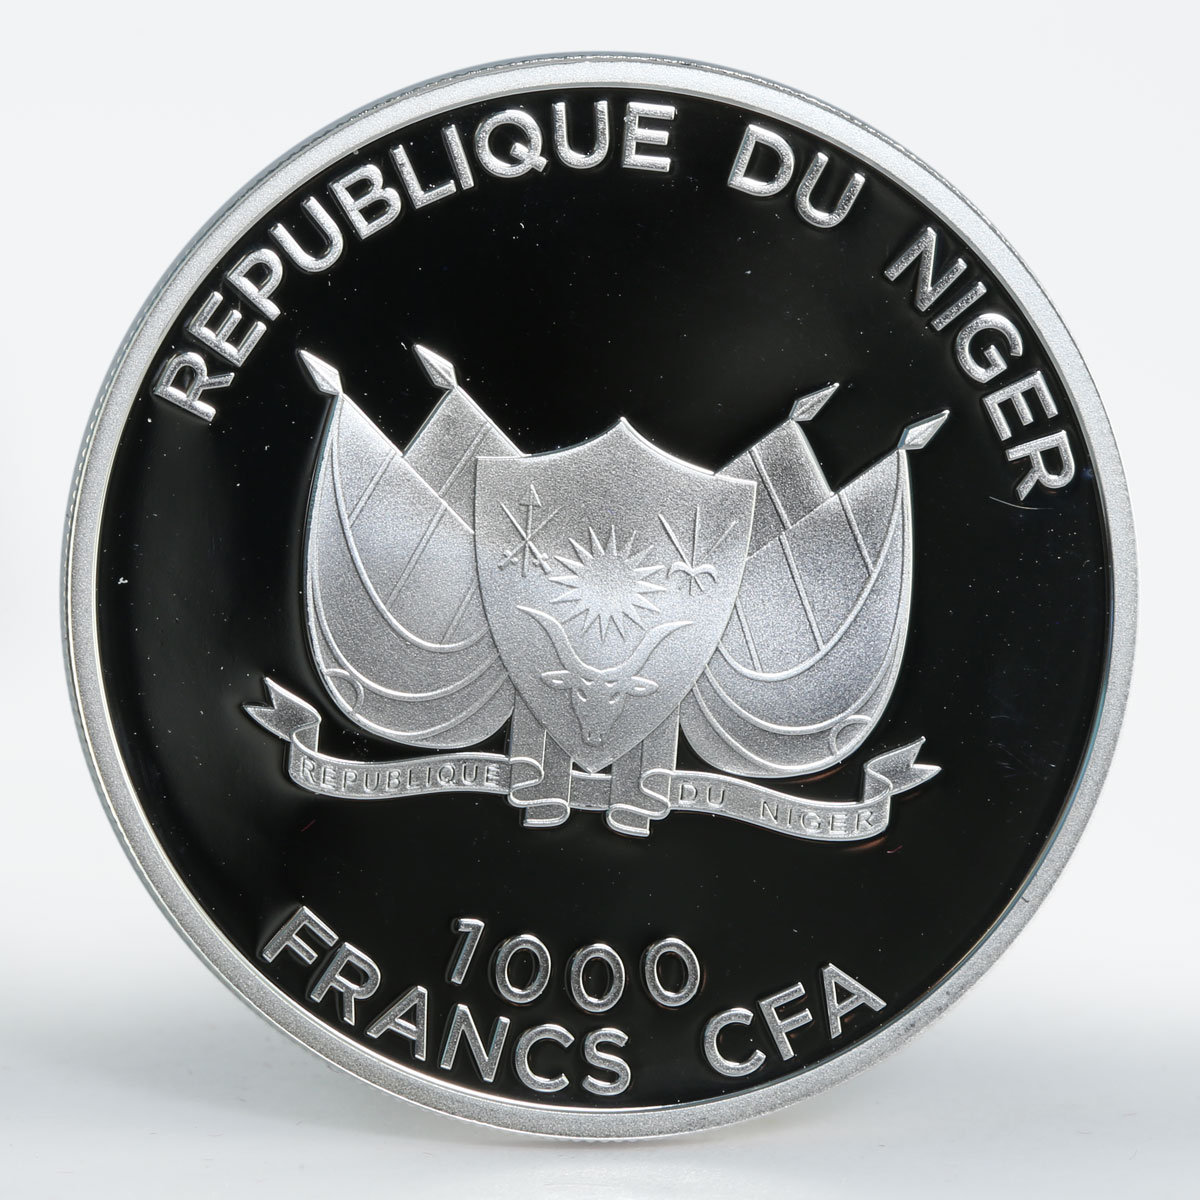 Niger 1000 francs Ramadan Karim gilded colored silver coin 2012